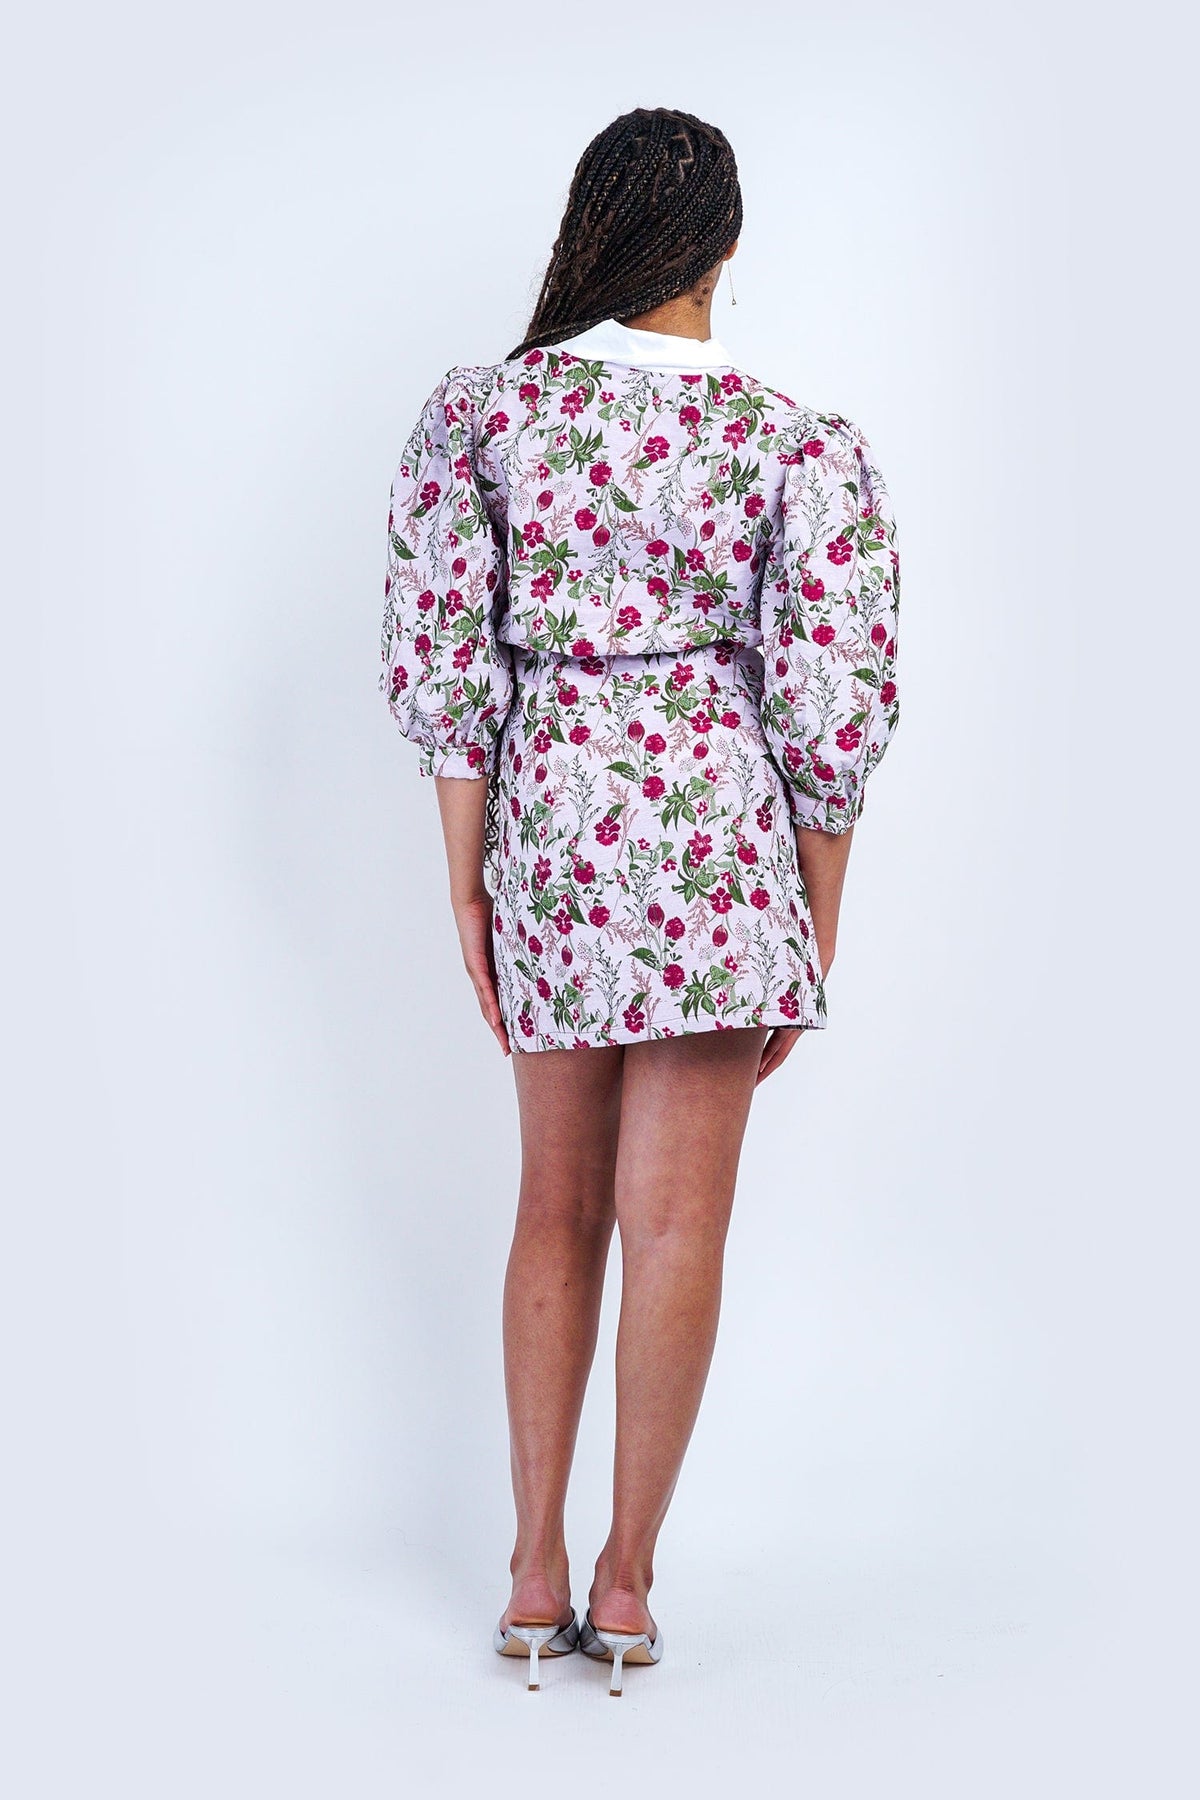 DCD DRESSES Blush Pink Jacquard Floral Print Collar Dress